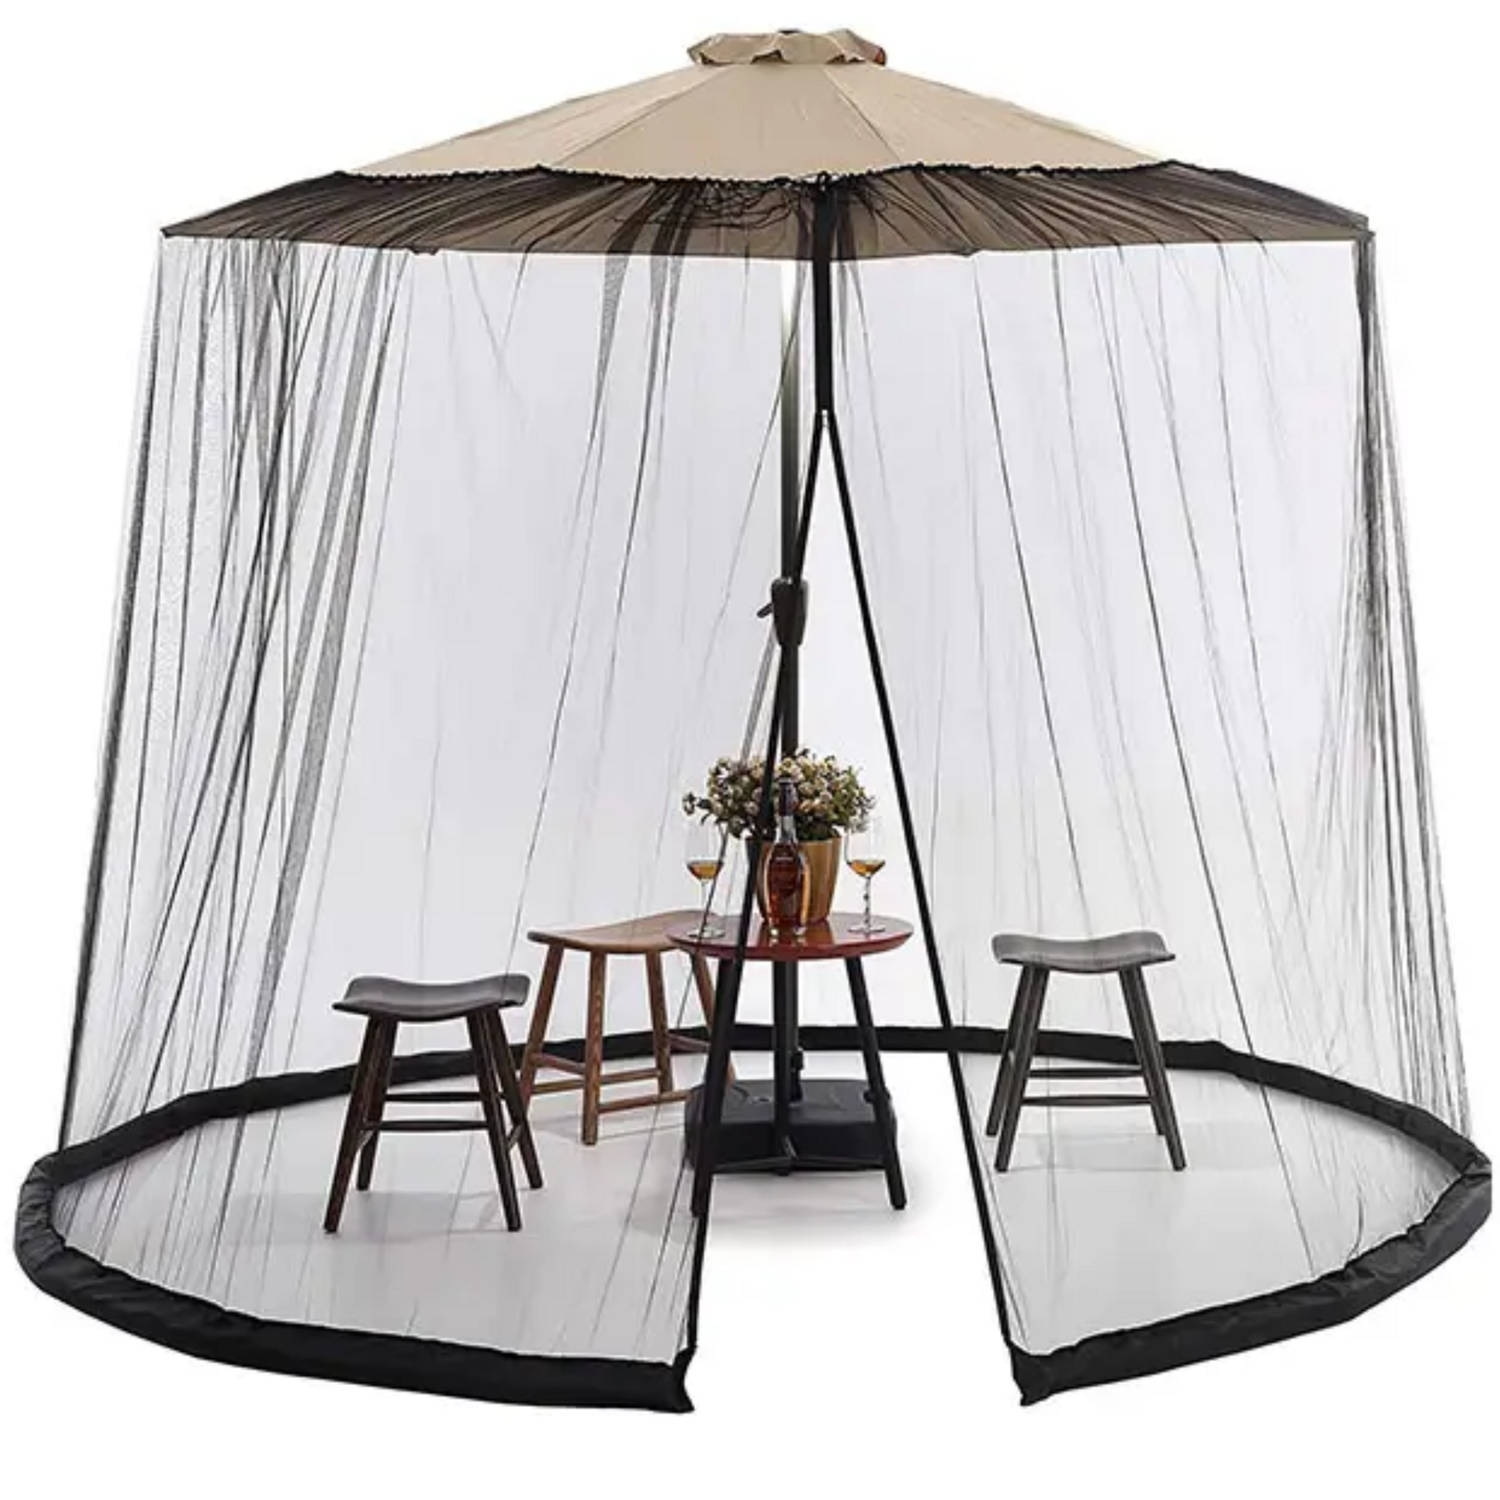 Muskietennet - Met verzwaarde rand - Parasol - Muggennet - Parasol klamboe - Muggen - Klamboe - Vliegengordijn voor parasol - ø 3m x h 2.3 m